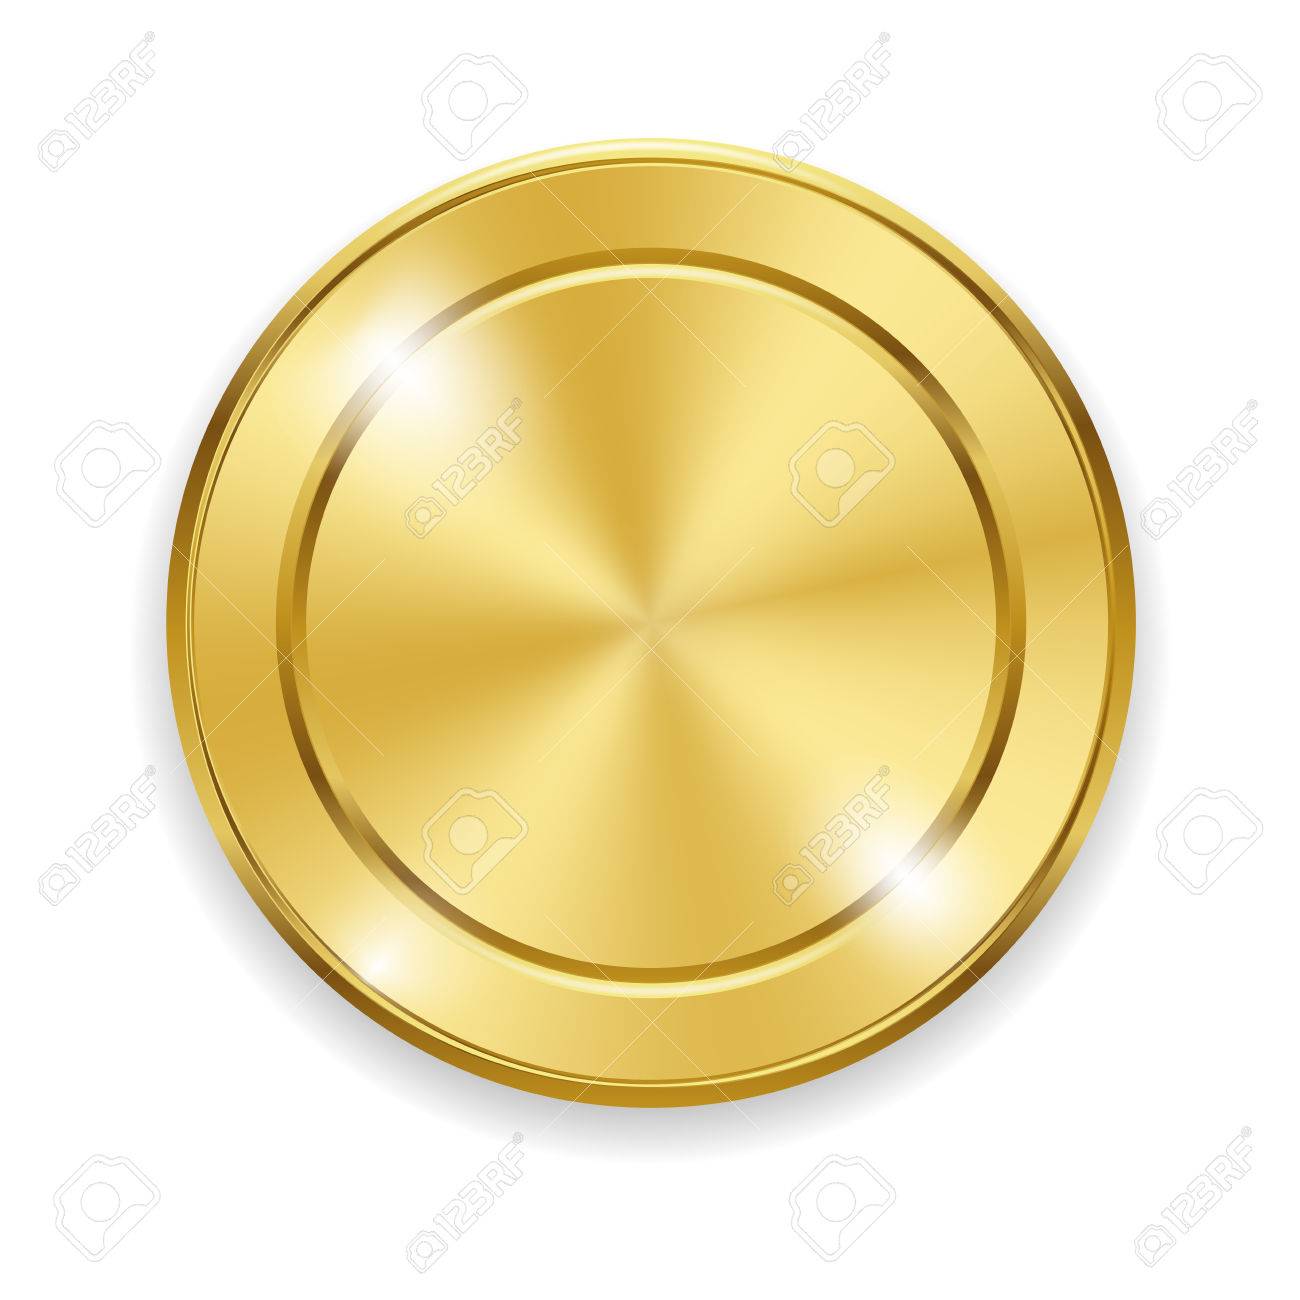 Blank Round Polished Gold Metal Badge On White Background